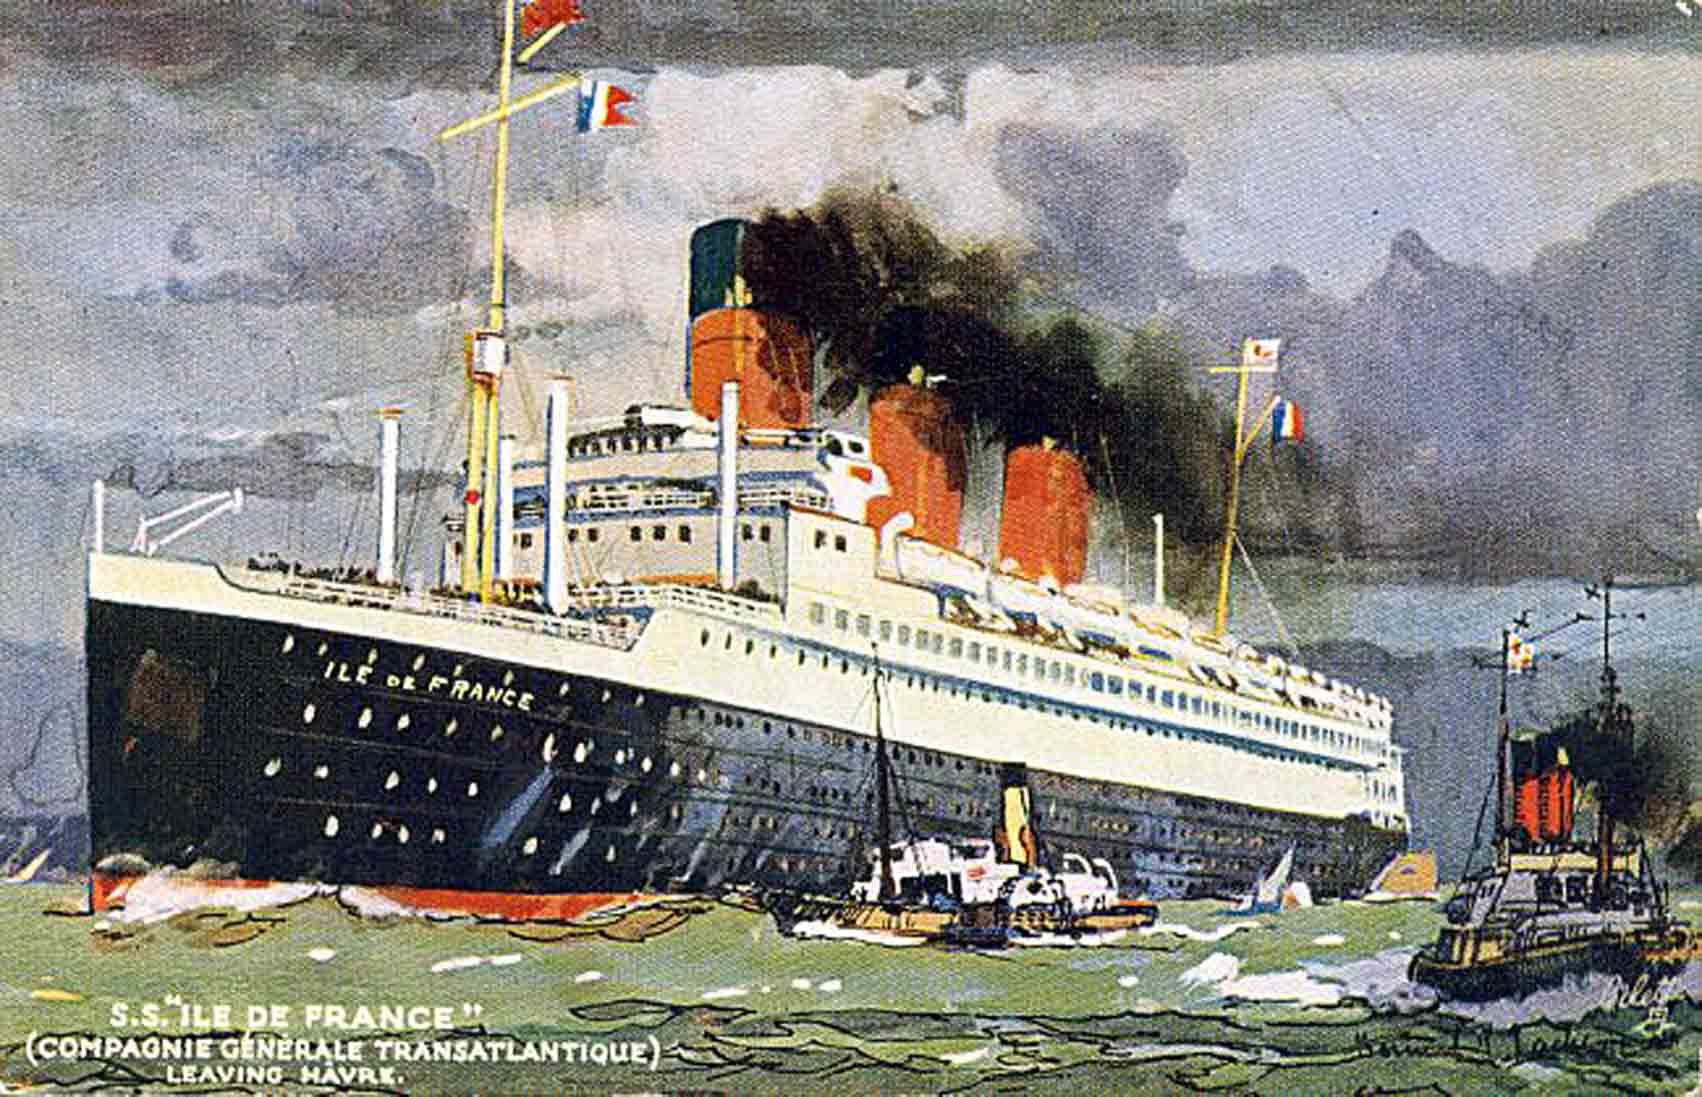 SS Ile de France